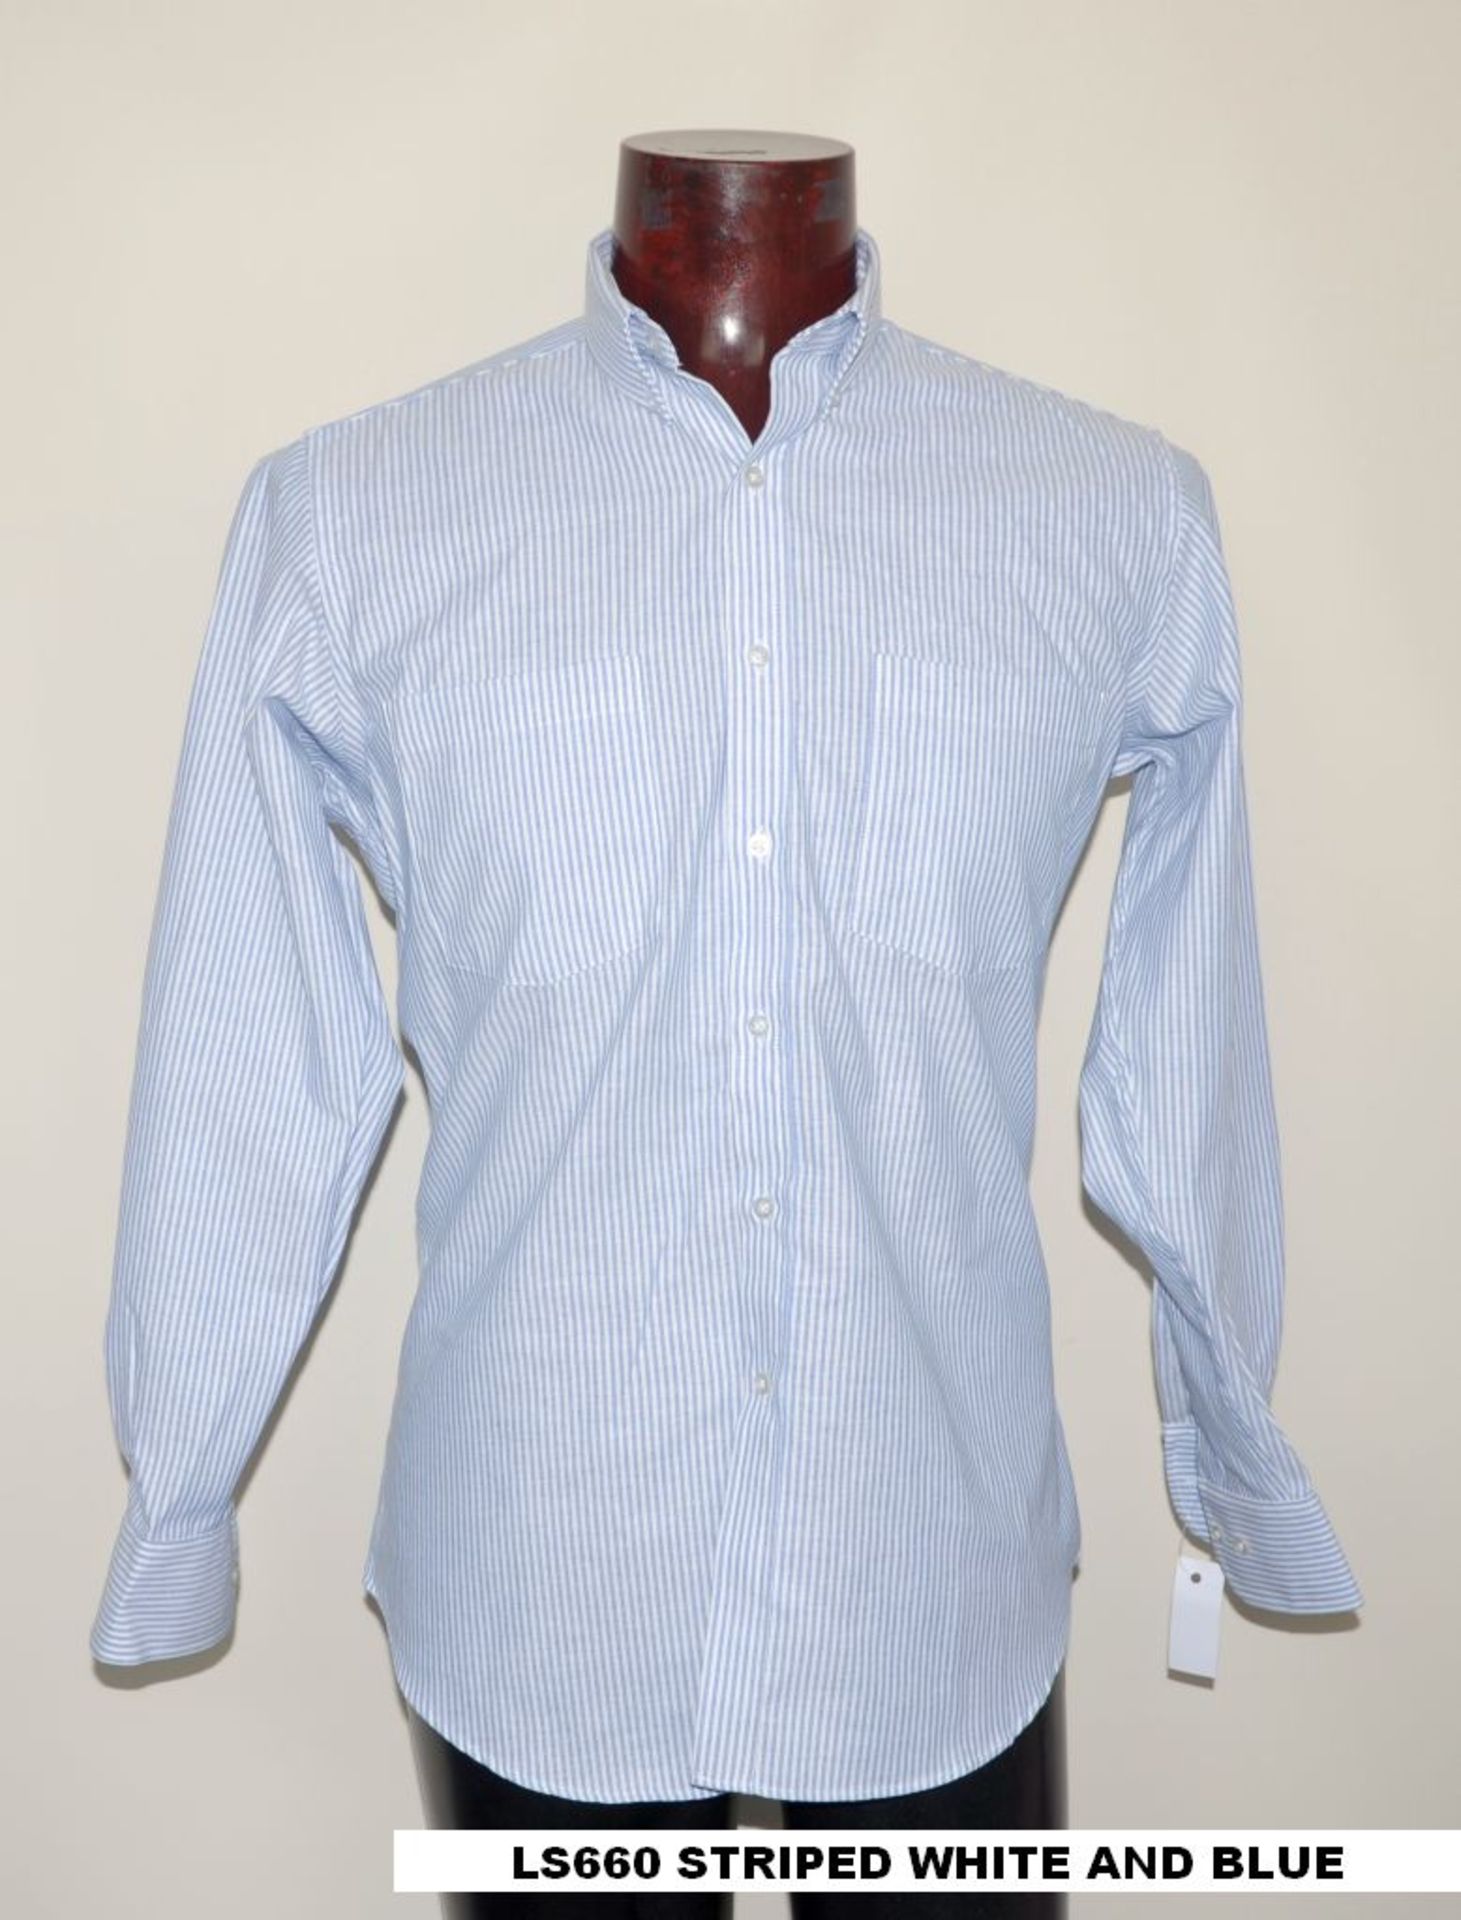 73 x Shirt L/S / Striped white/blue / LS660 BU